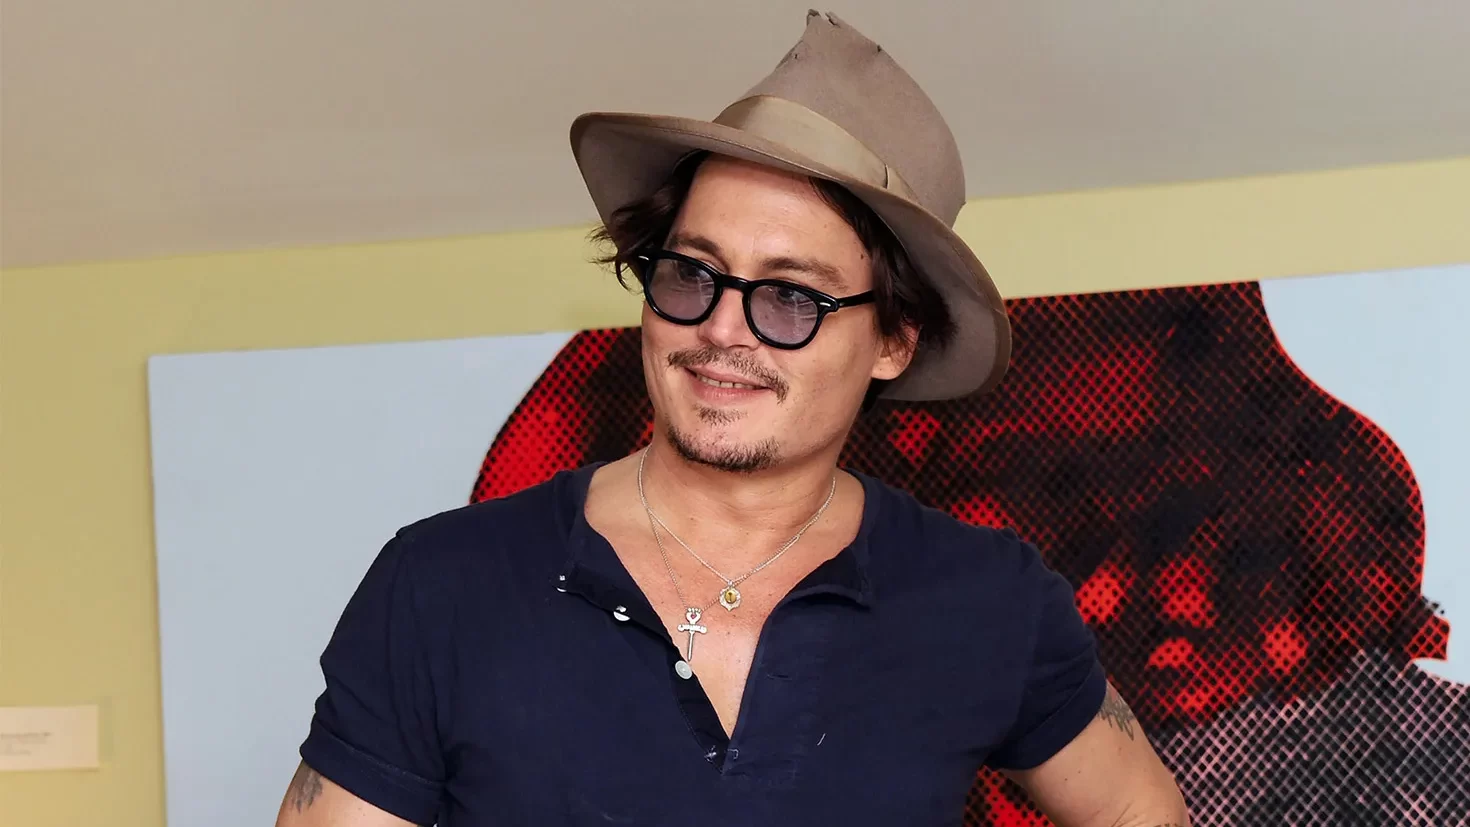 Johnny Depp Net Worth Before Amber Heard